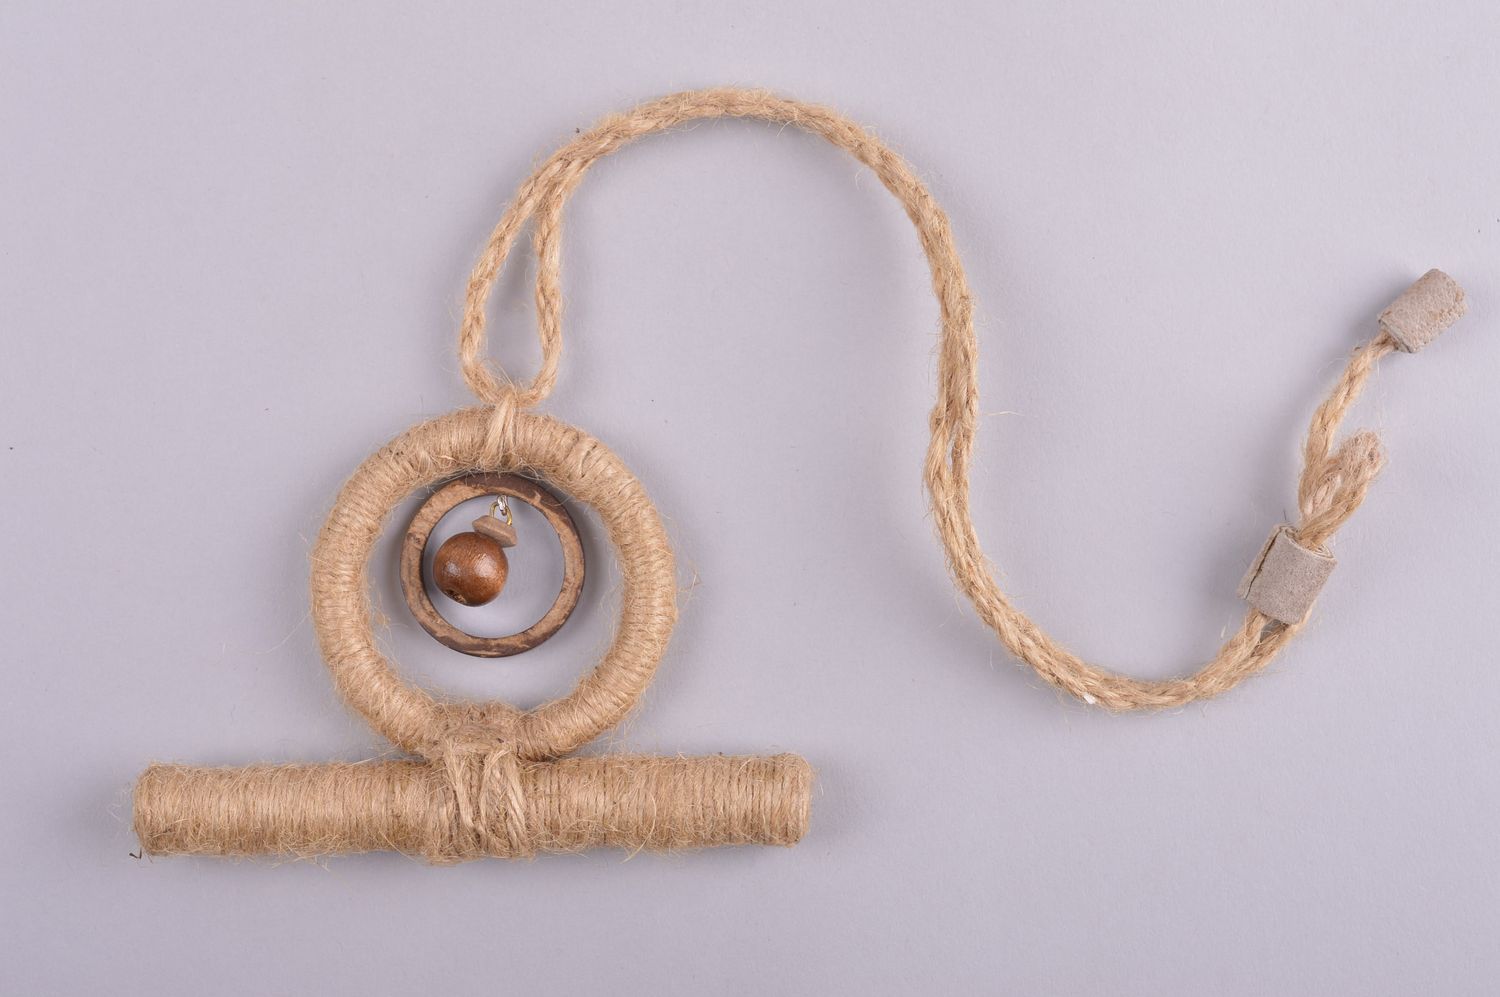 Handmade pendant on lace pendant in ethnic style designer accessory present photo 2